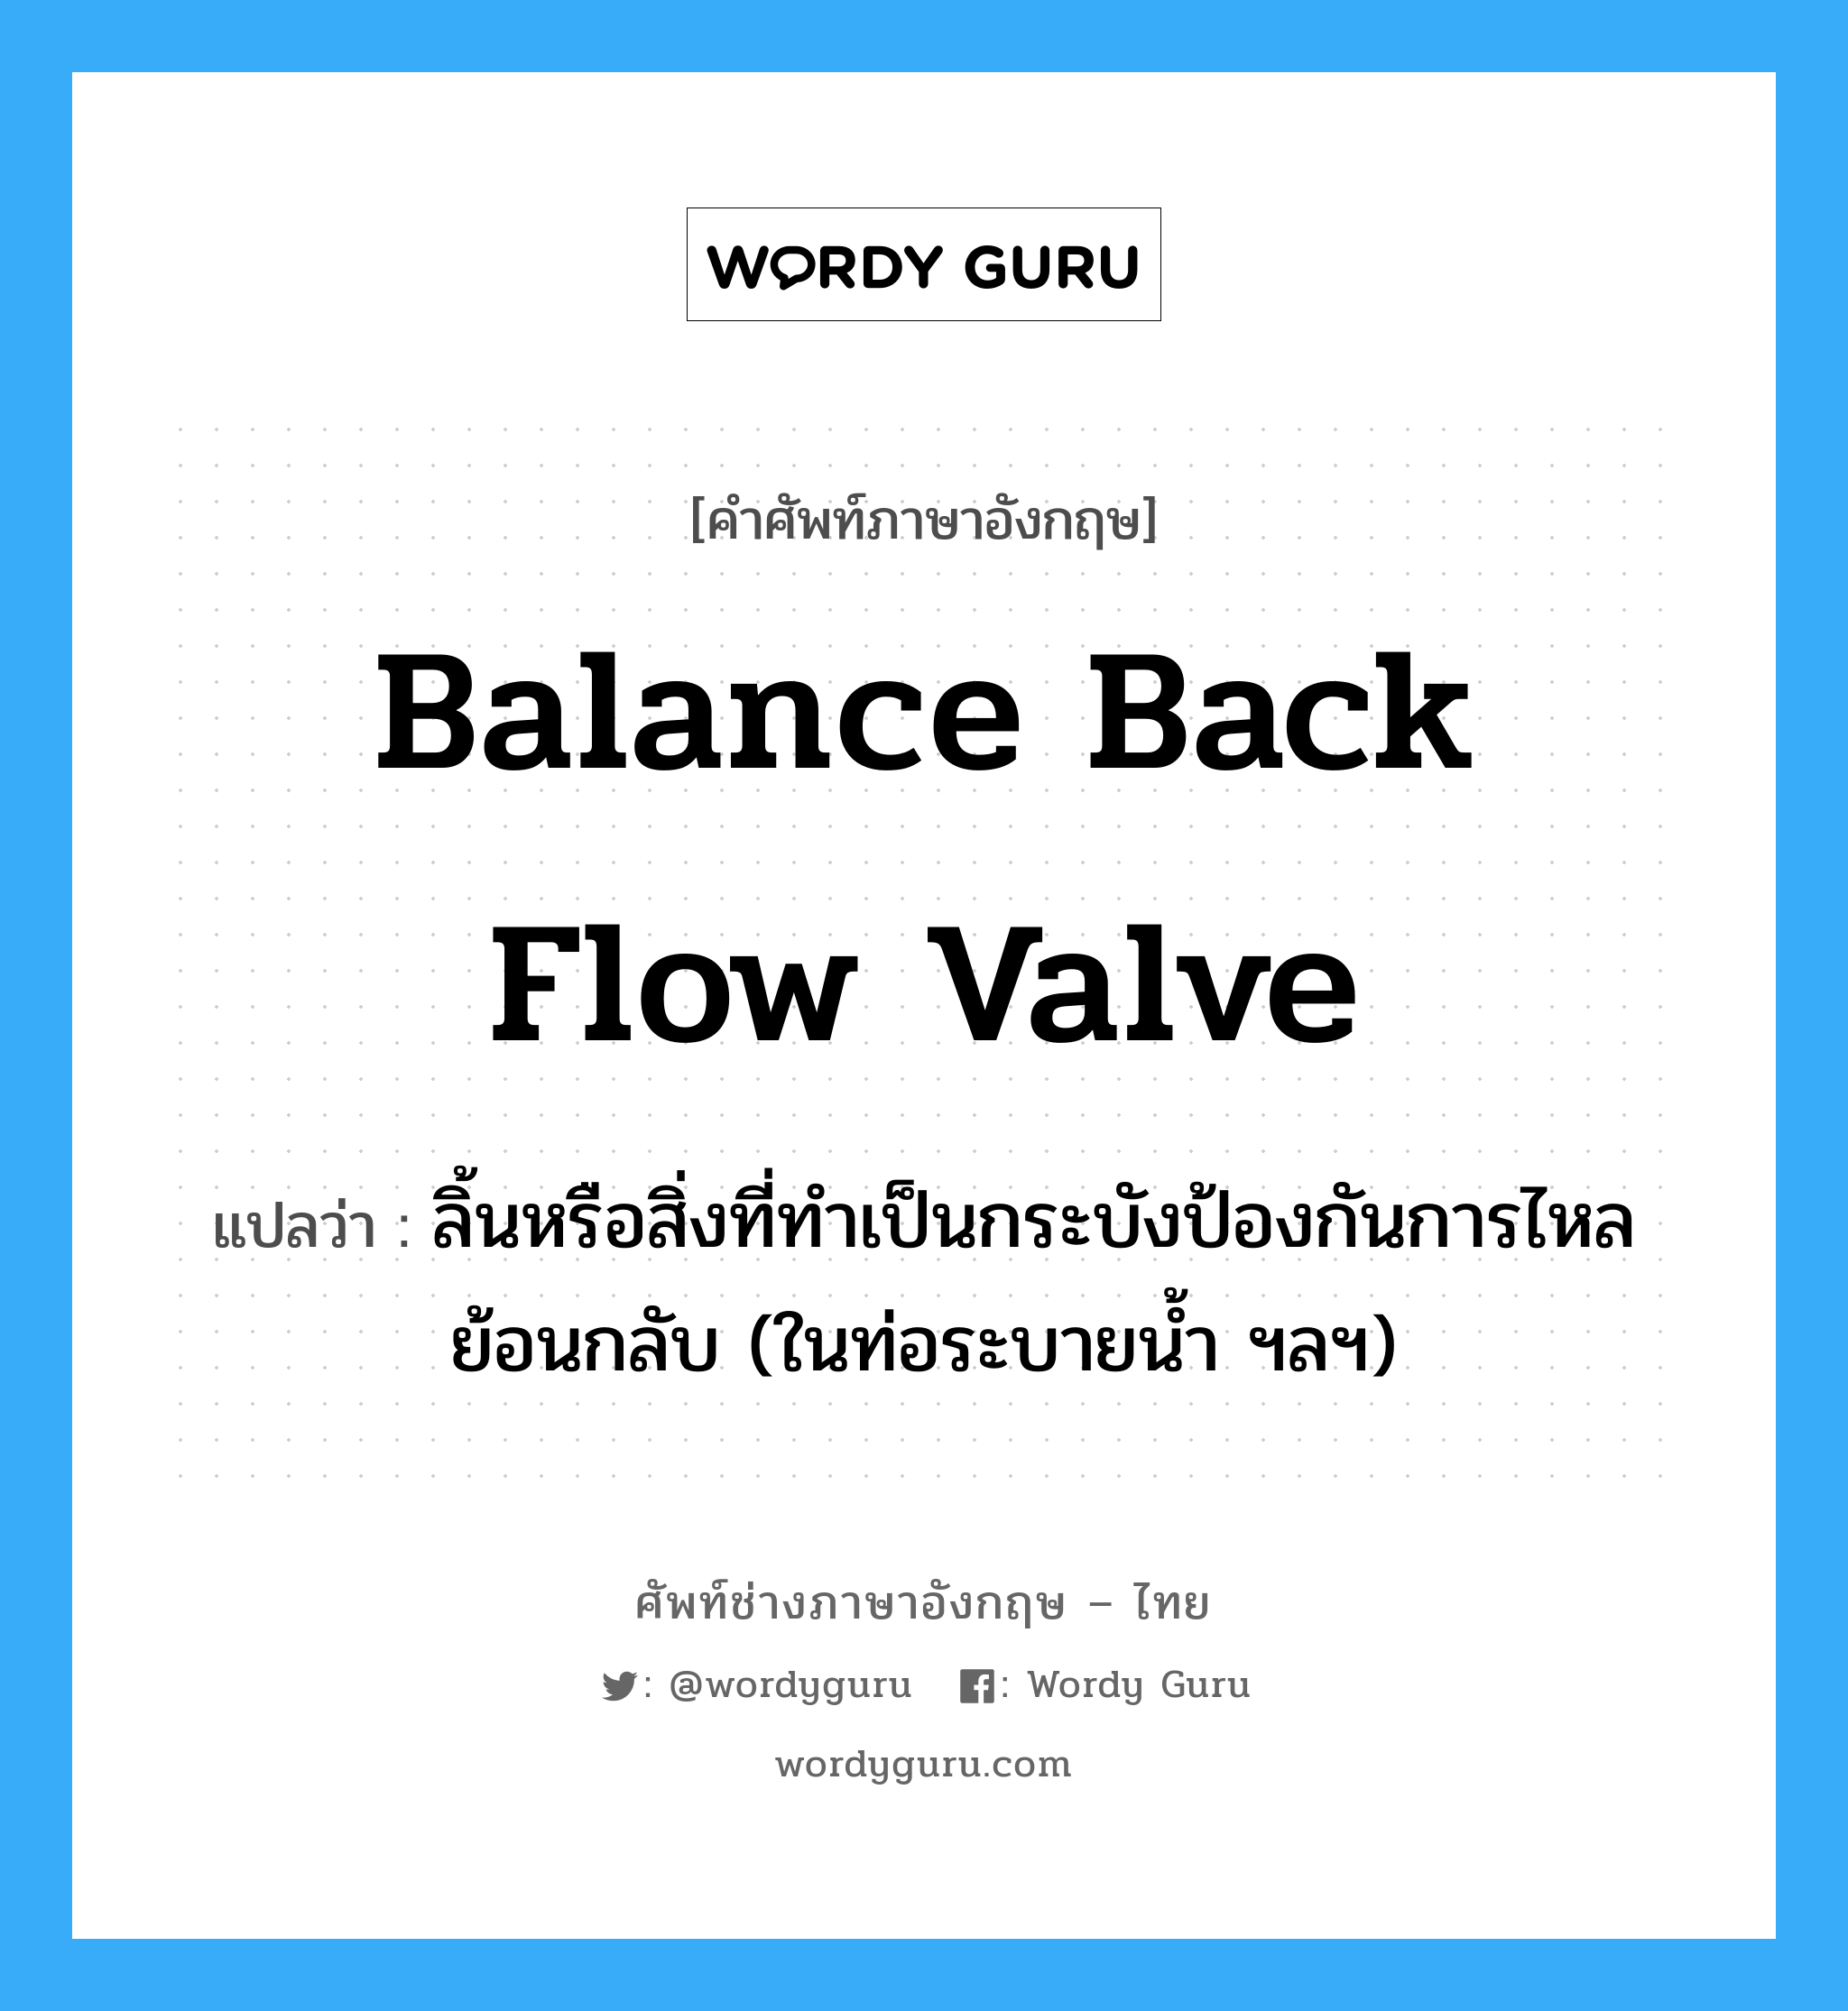 balance back flow valve แปลว่า?, คำศัพท์ช่างภาษาอังกฤษ - ไทย balance back flow valve คำศัพท์ภาษาอังกฤษ balance back flow valve แปลว่า ลิ้นหรือสิ่งที่ทำเป็นกระบังป้องกันการไหลย้อนกลับ (ในท่อระบายน้ำ ฯลฯ)